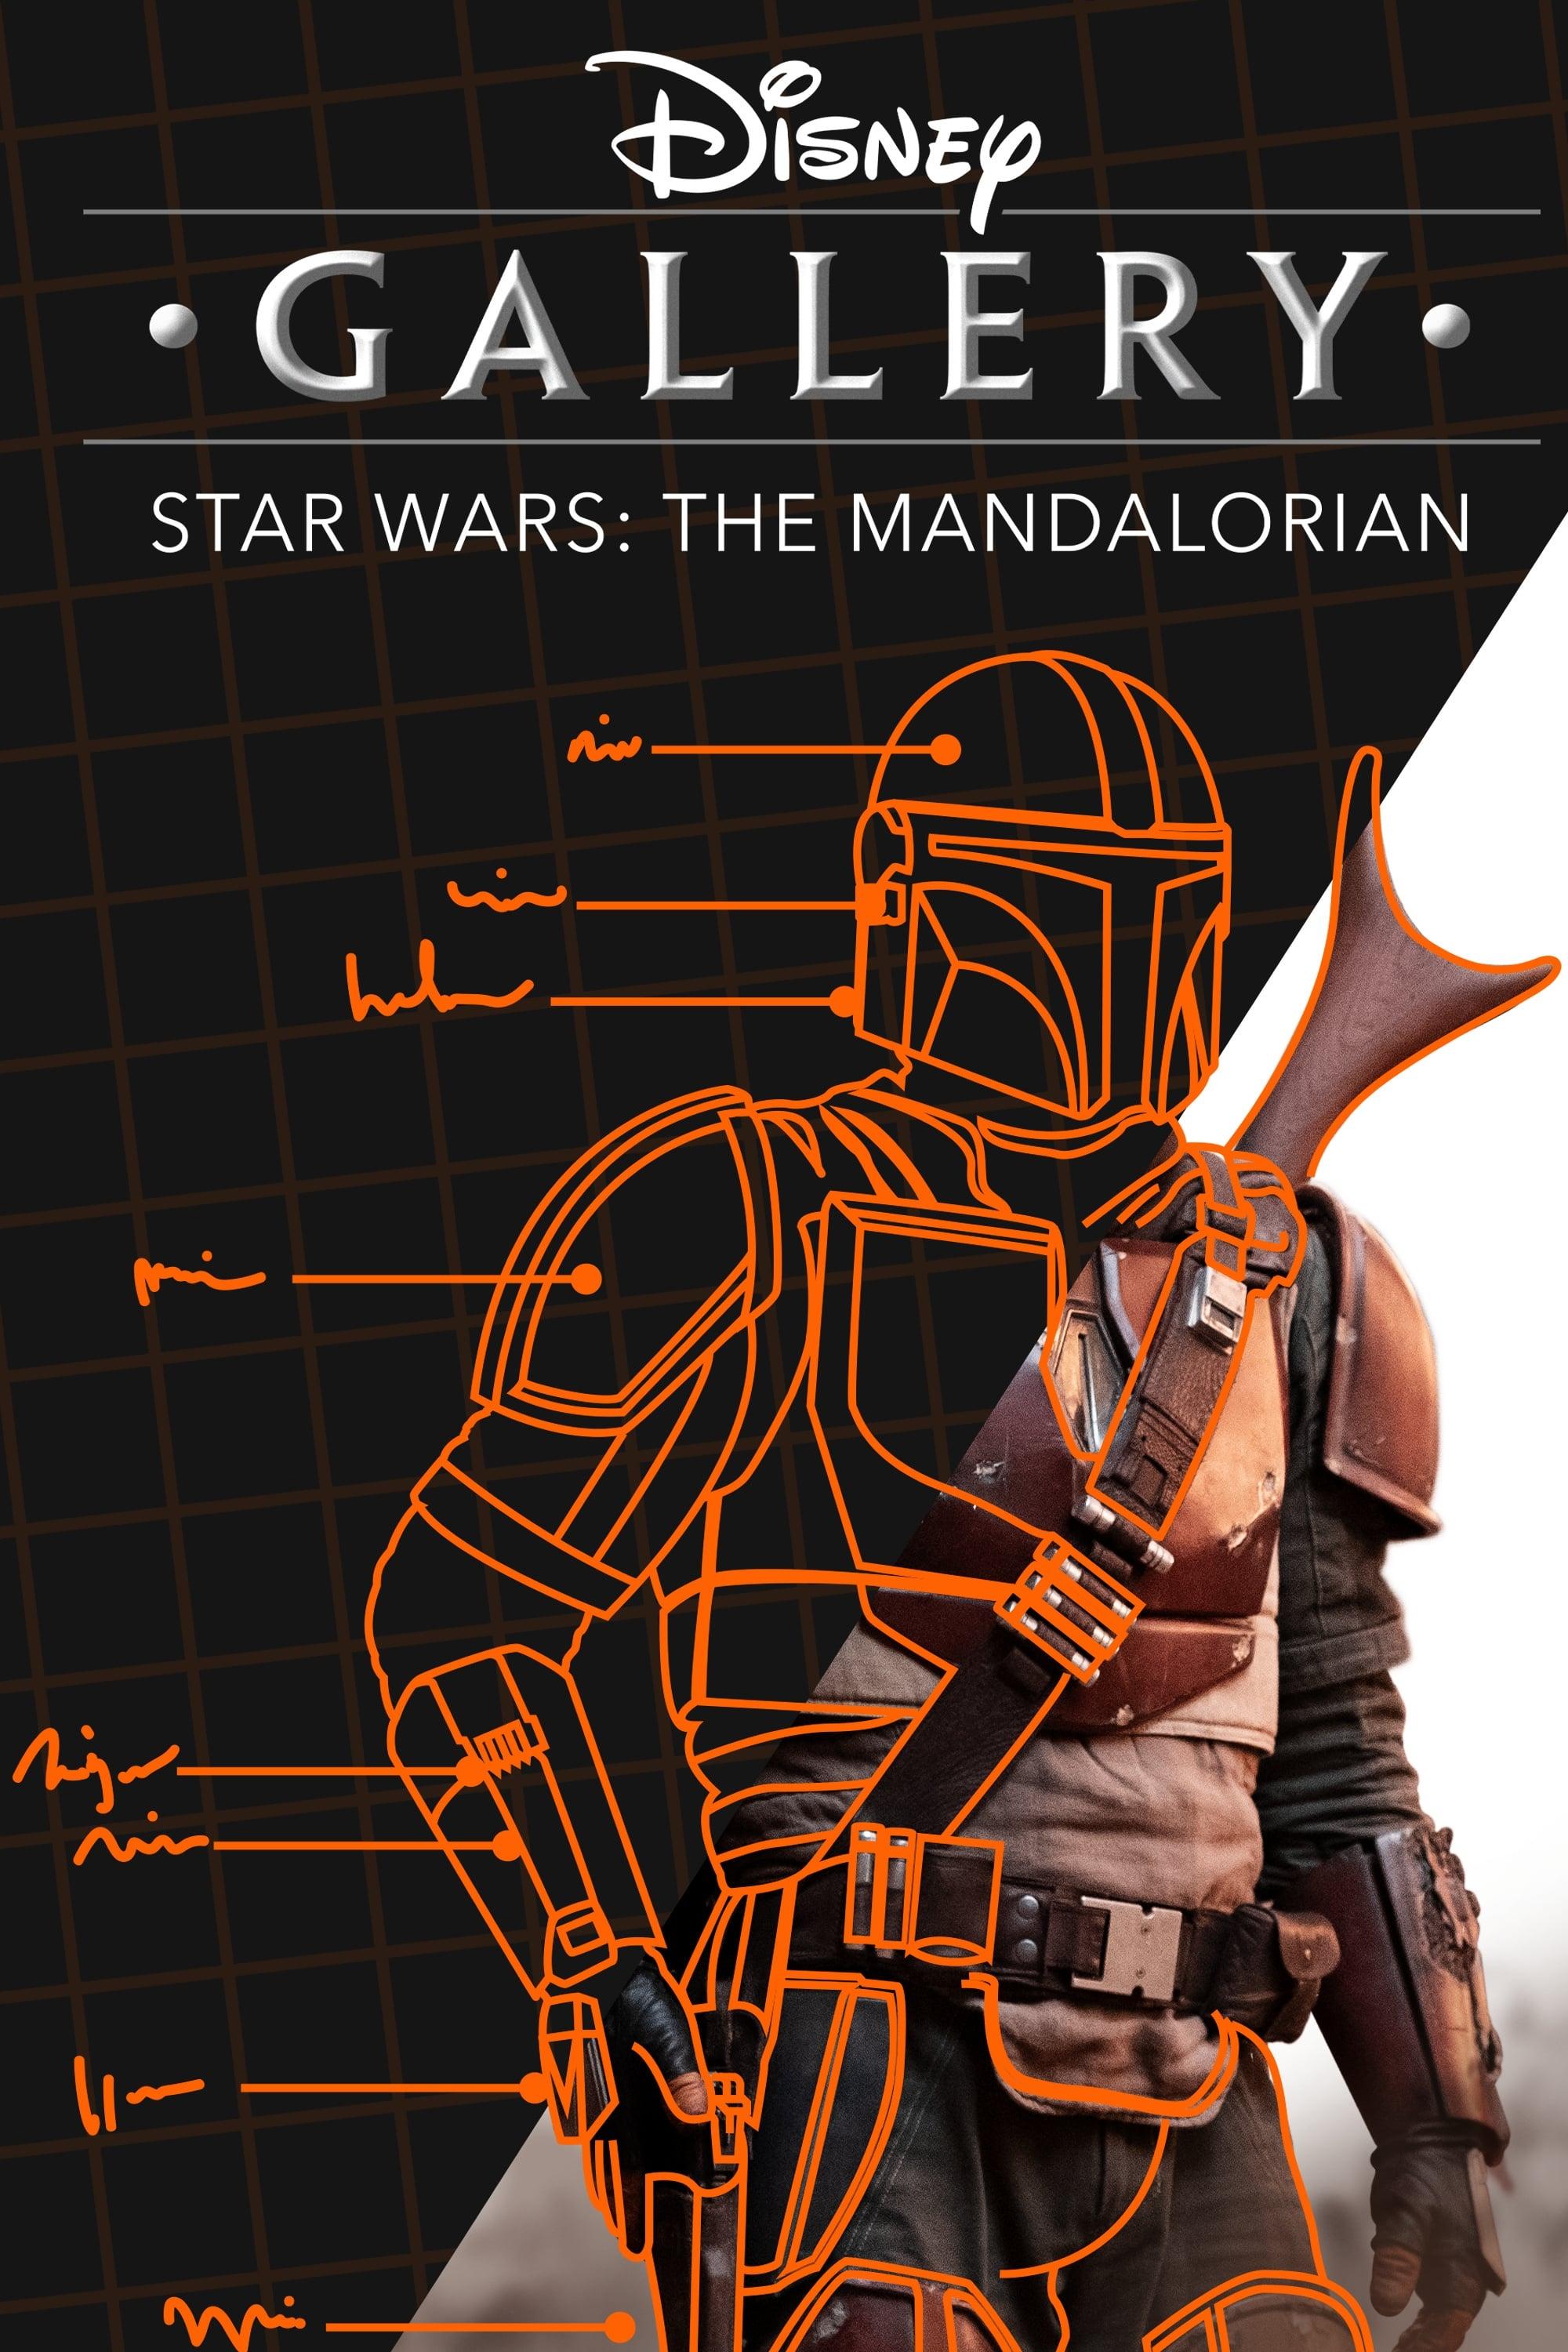 Disney Gallery / Star Wars: The Mandalorian poster